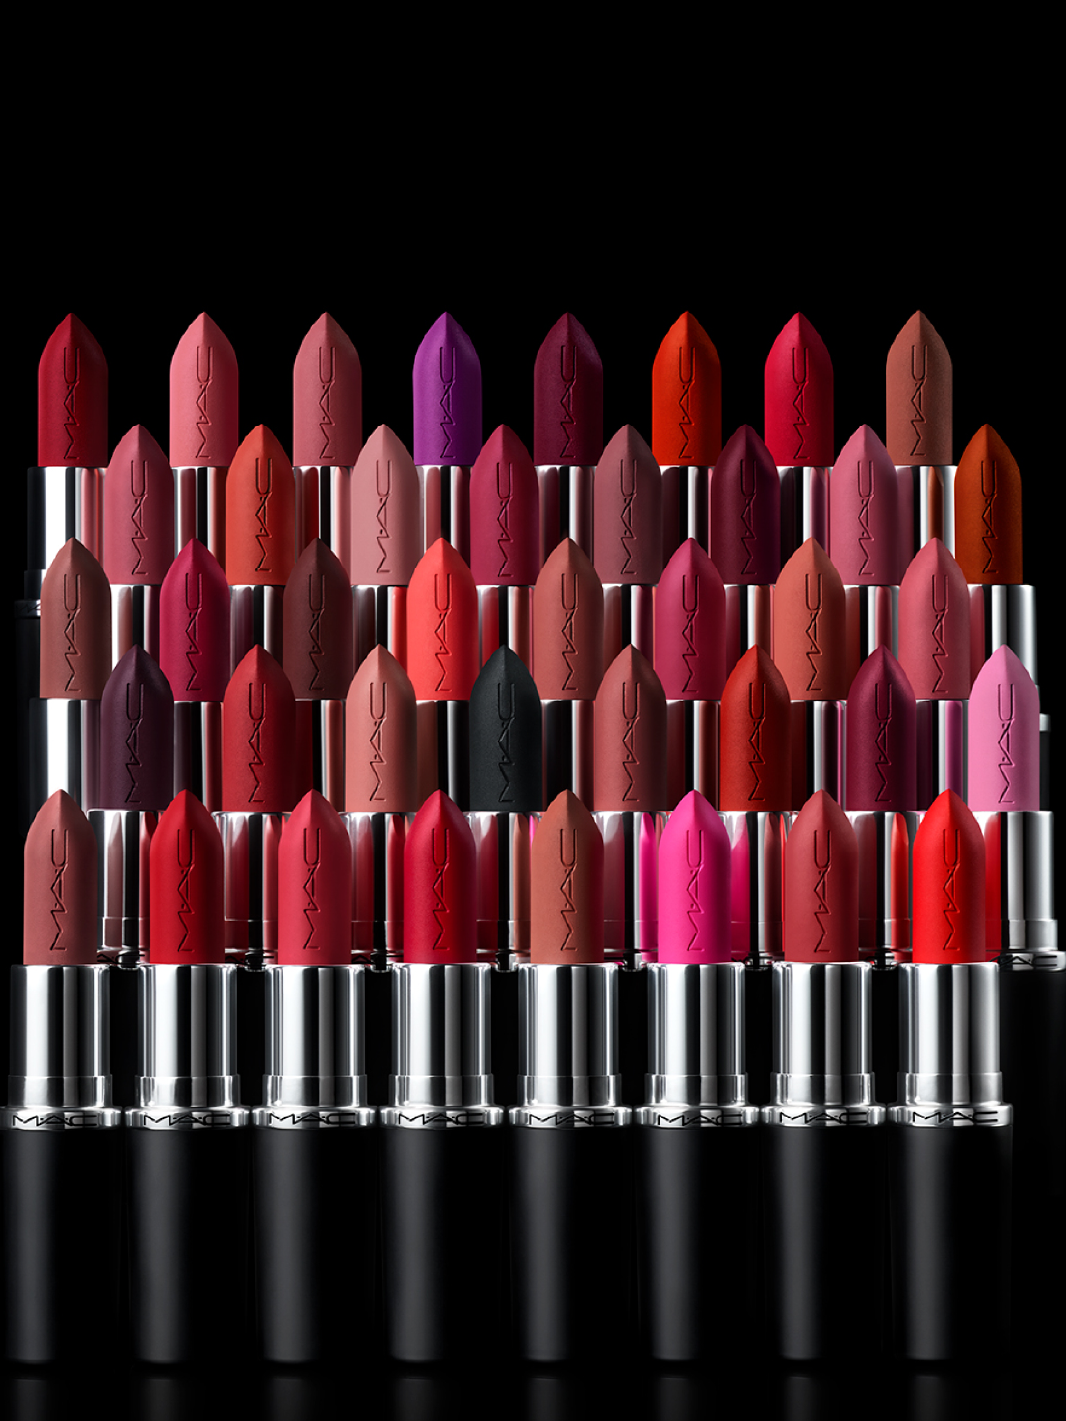 mascara, lashes, makeup, beauty, cosmetics, MAC, MAC cosmetics, blush, lipstick, MACximal 										